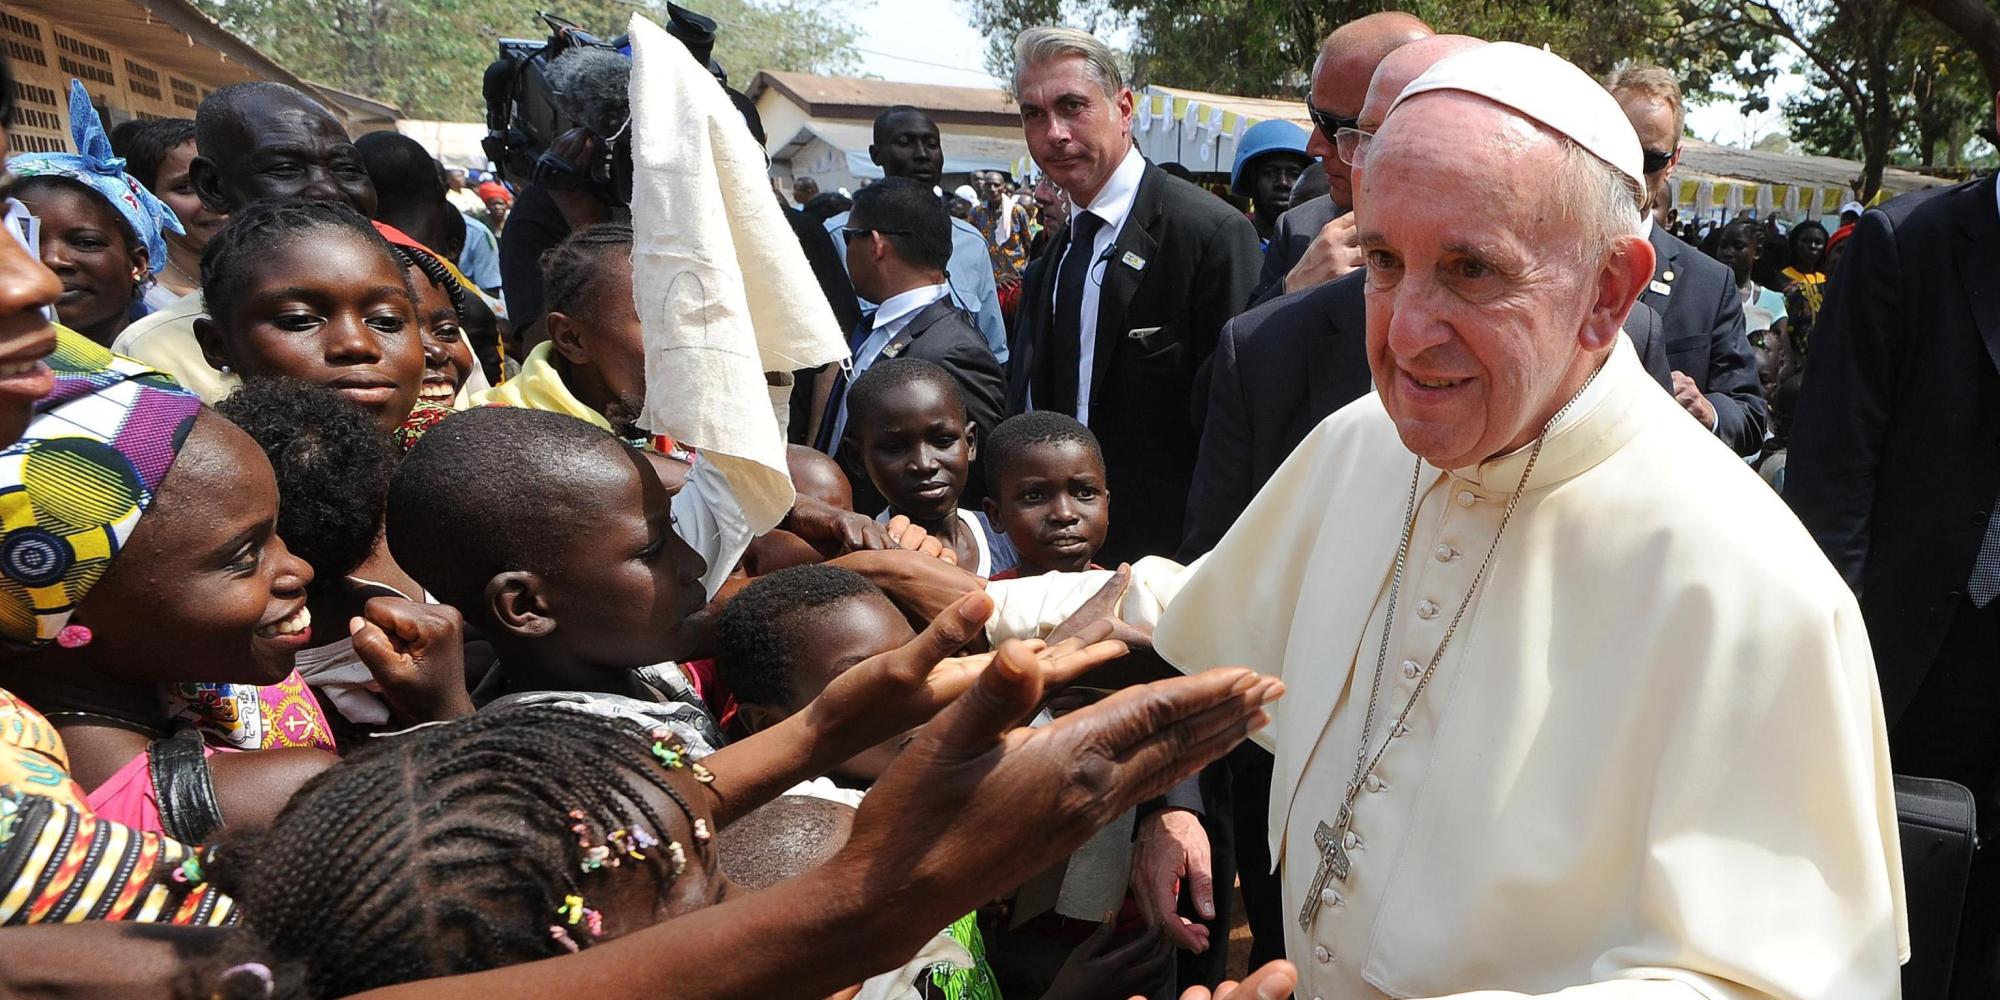 Papa in Africa profezia e miracolo